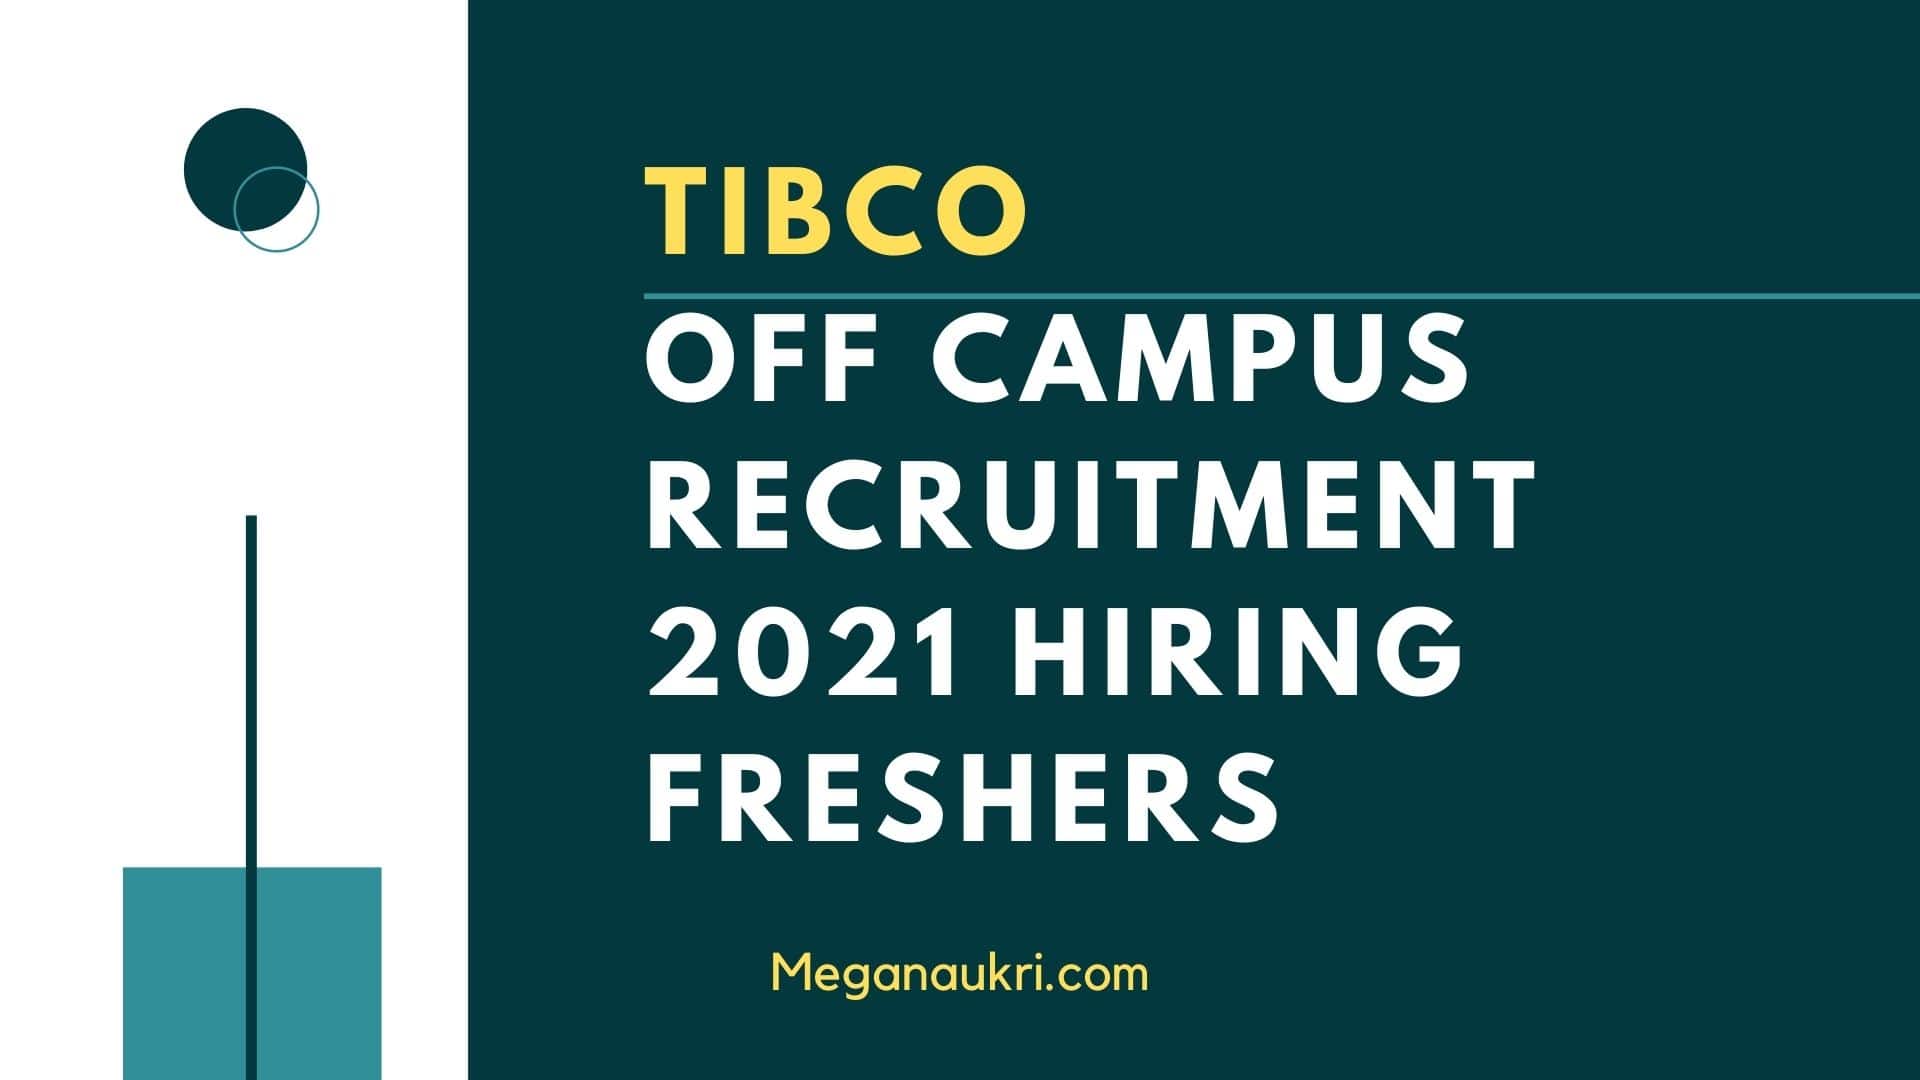 Tibco-Off-Campus-Recruitment-2021-Hiring-Freshers